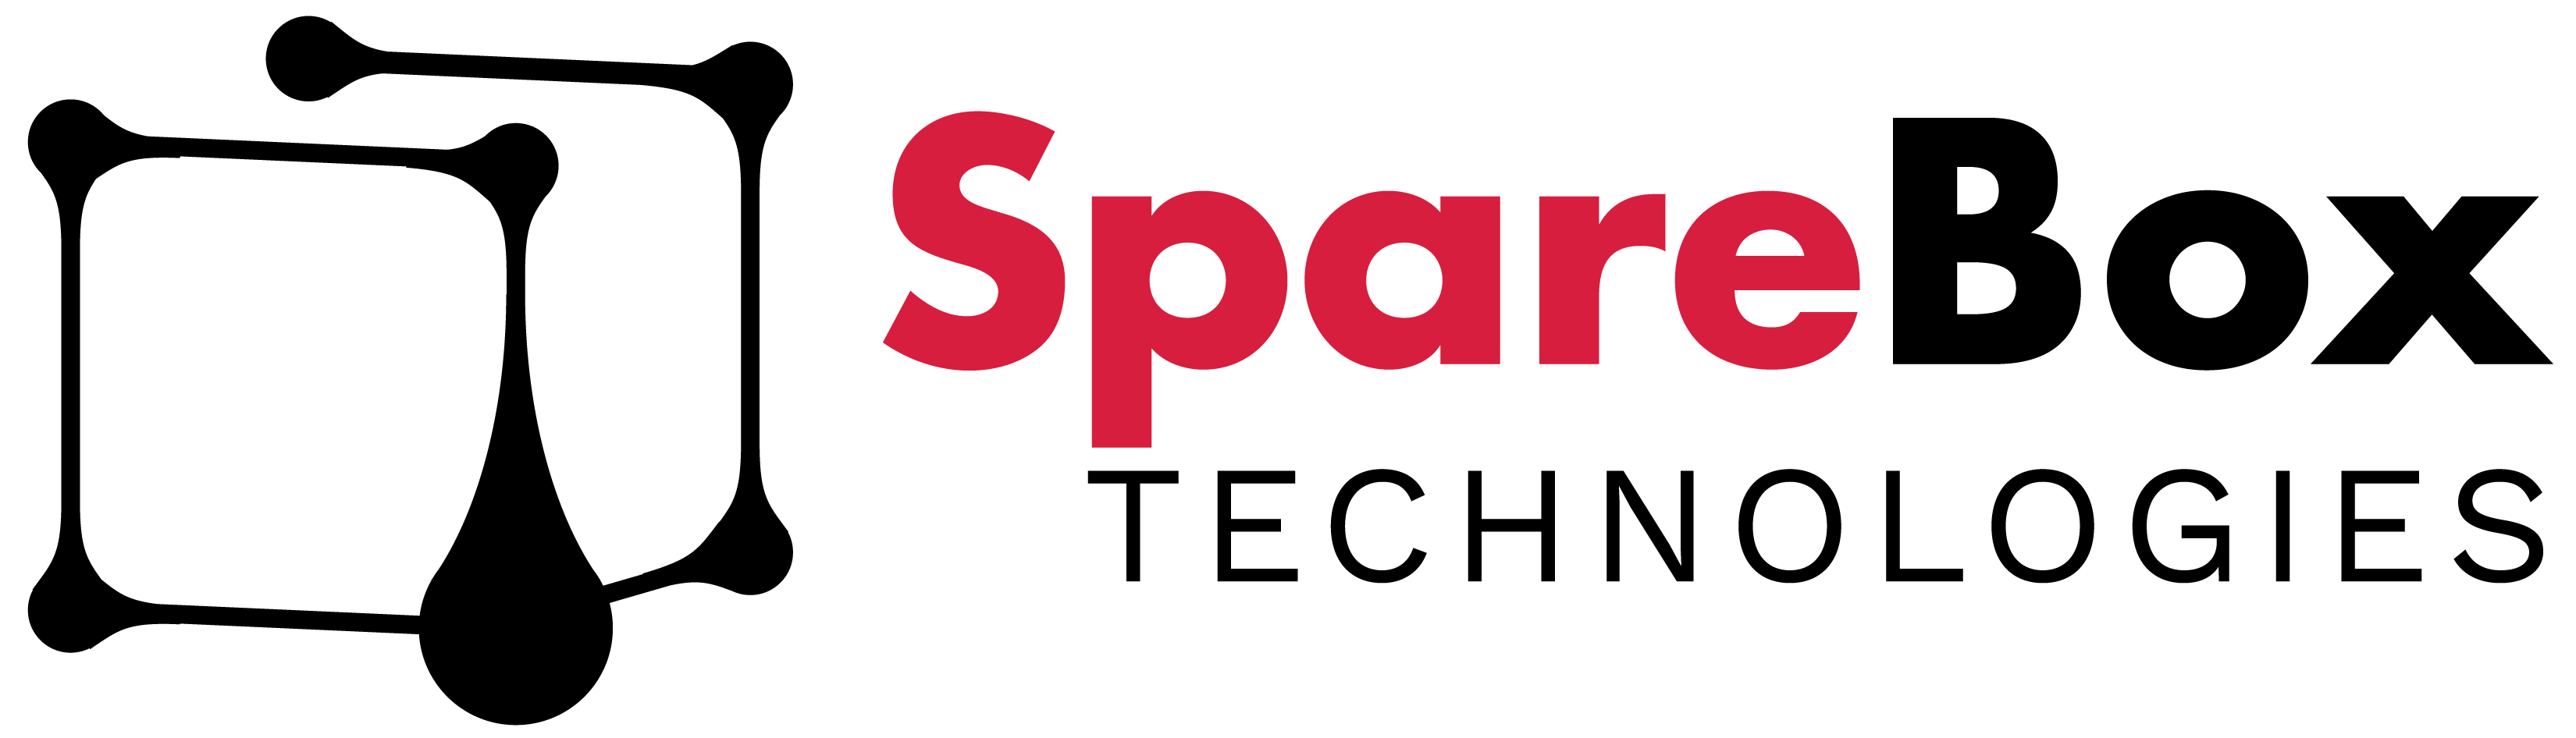 SpareBox Technologies